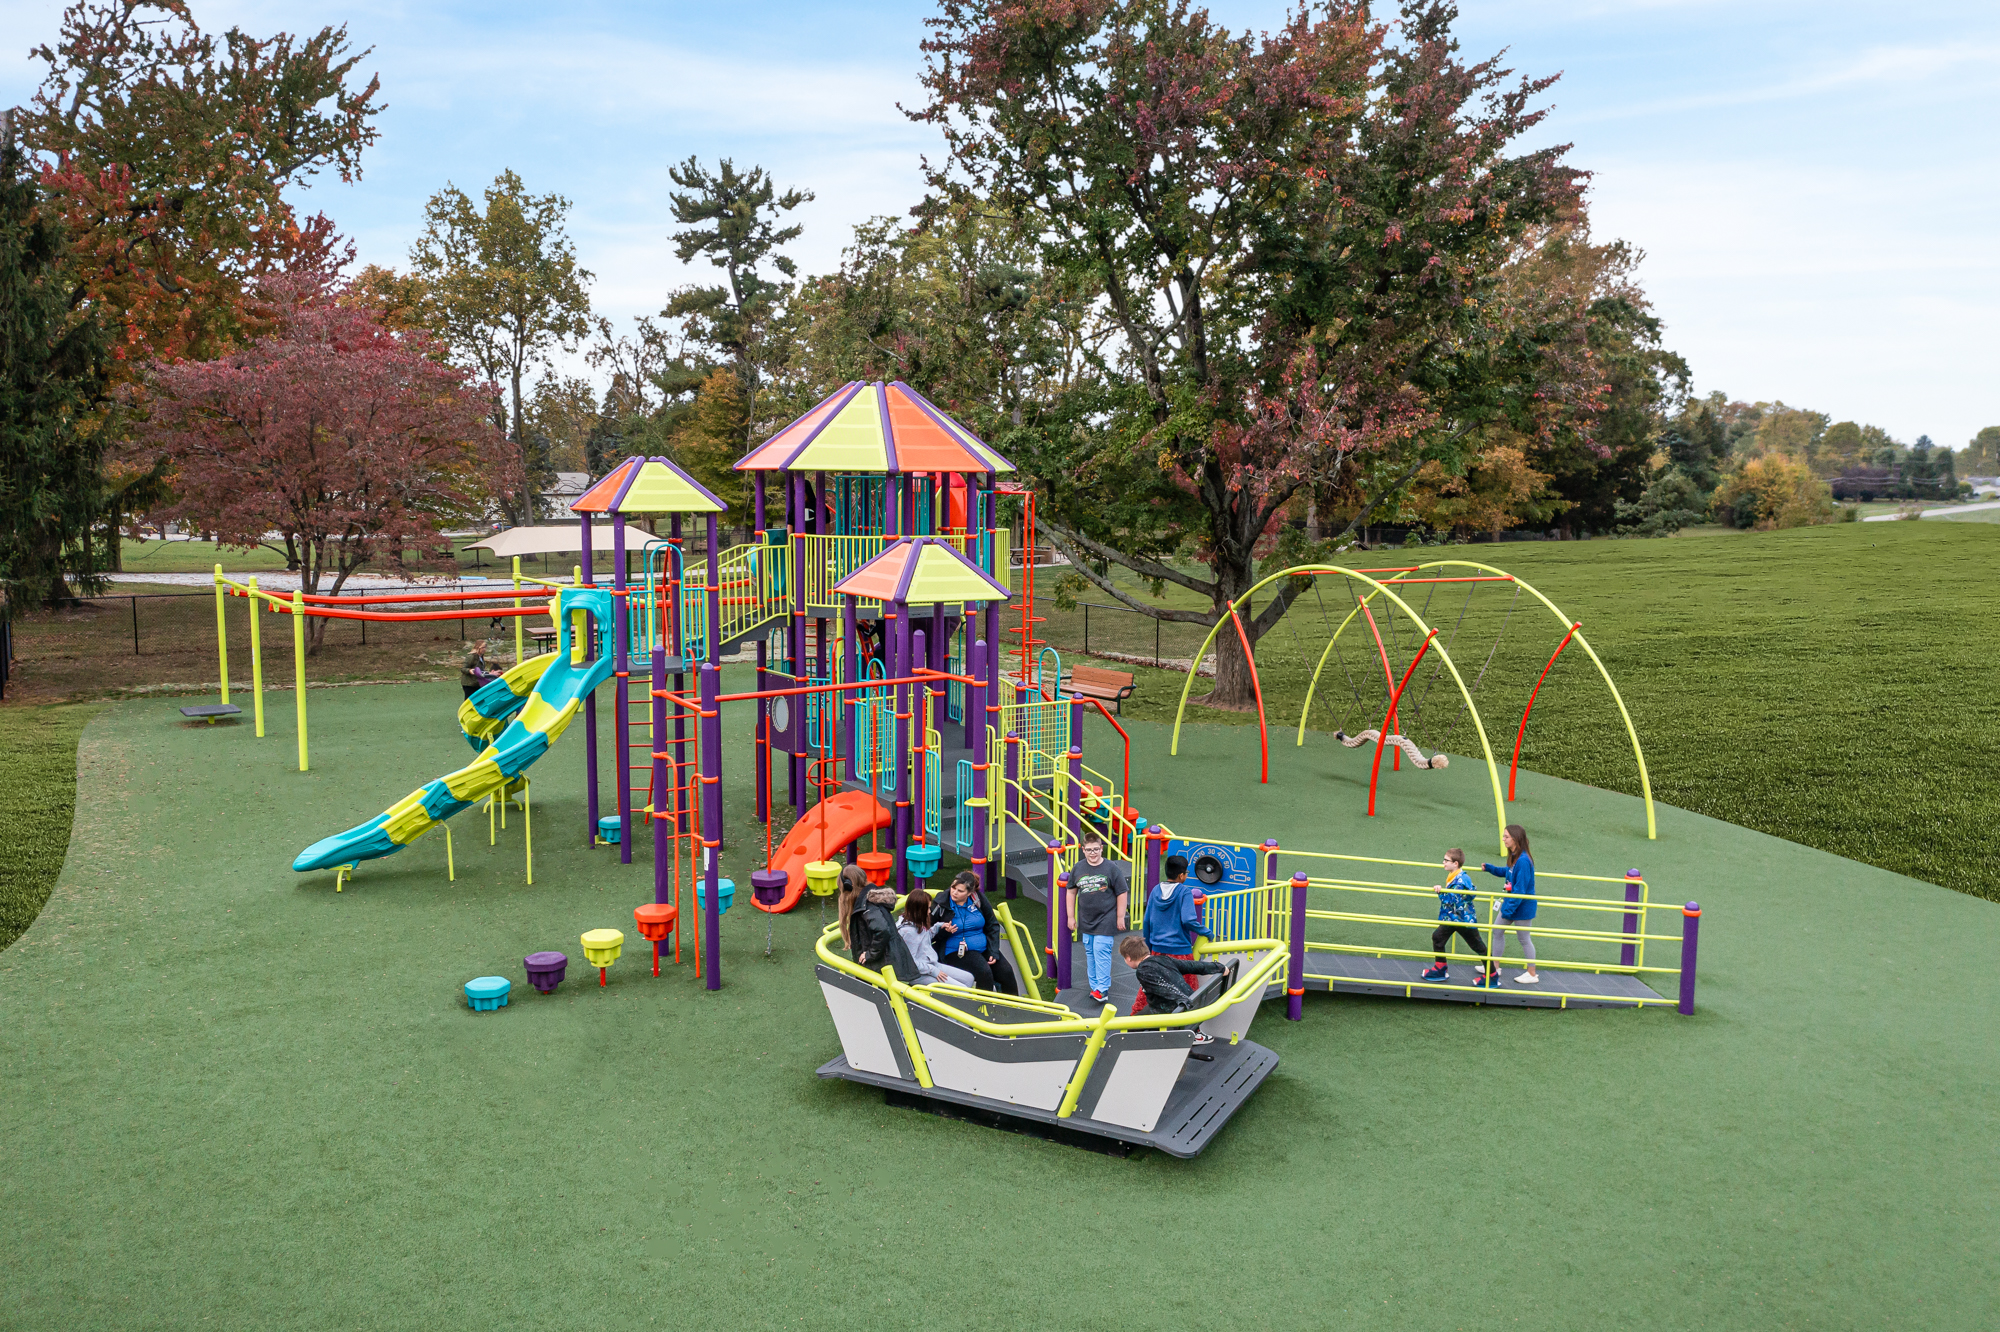 Creating the perfect playground